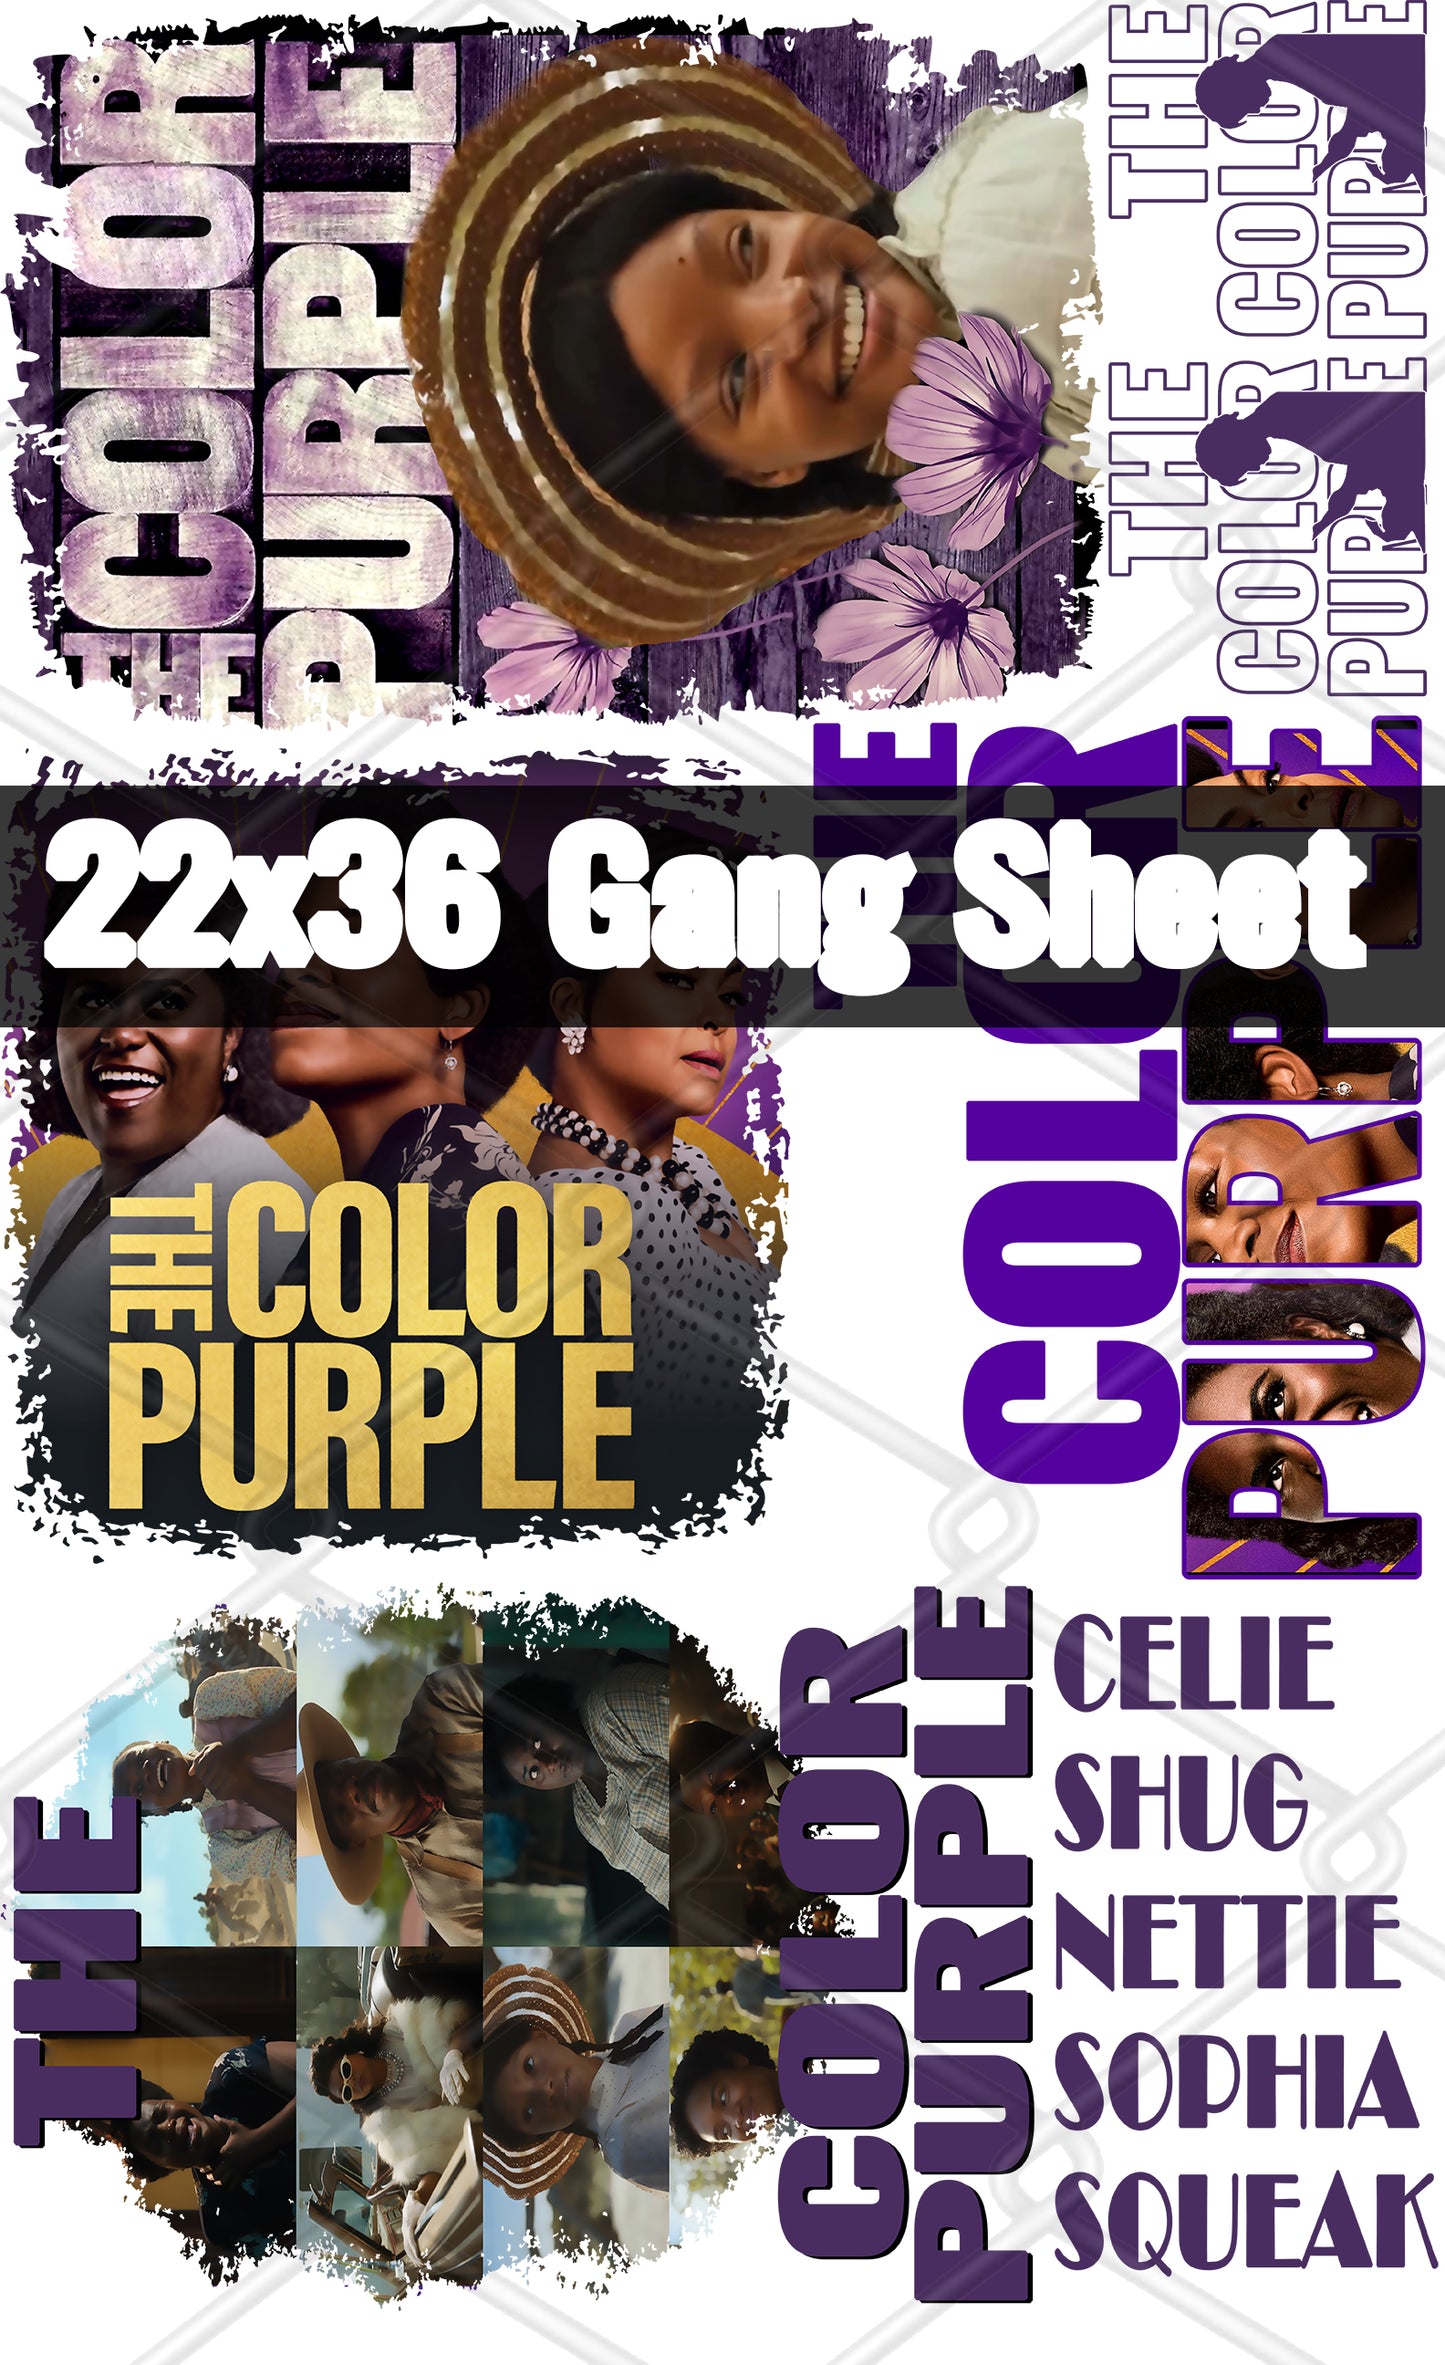 The Color Purple DTF Gang Sheet